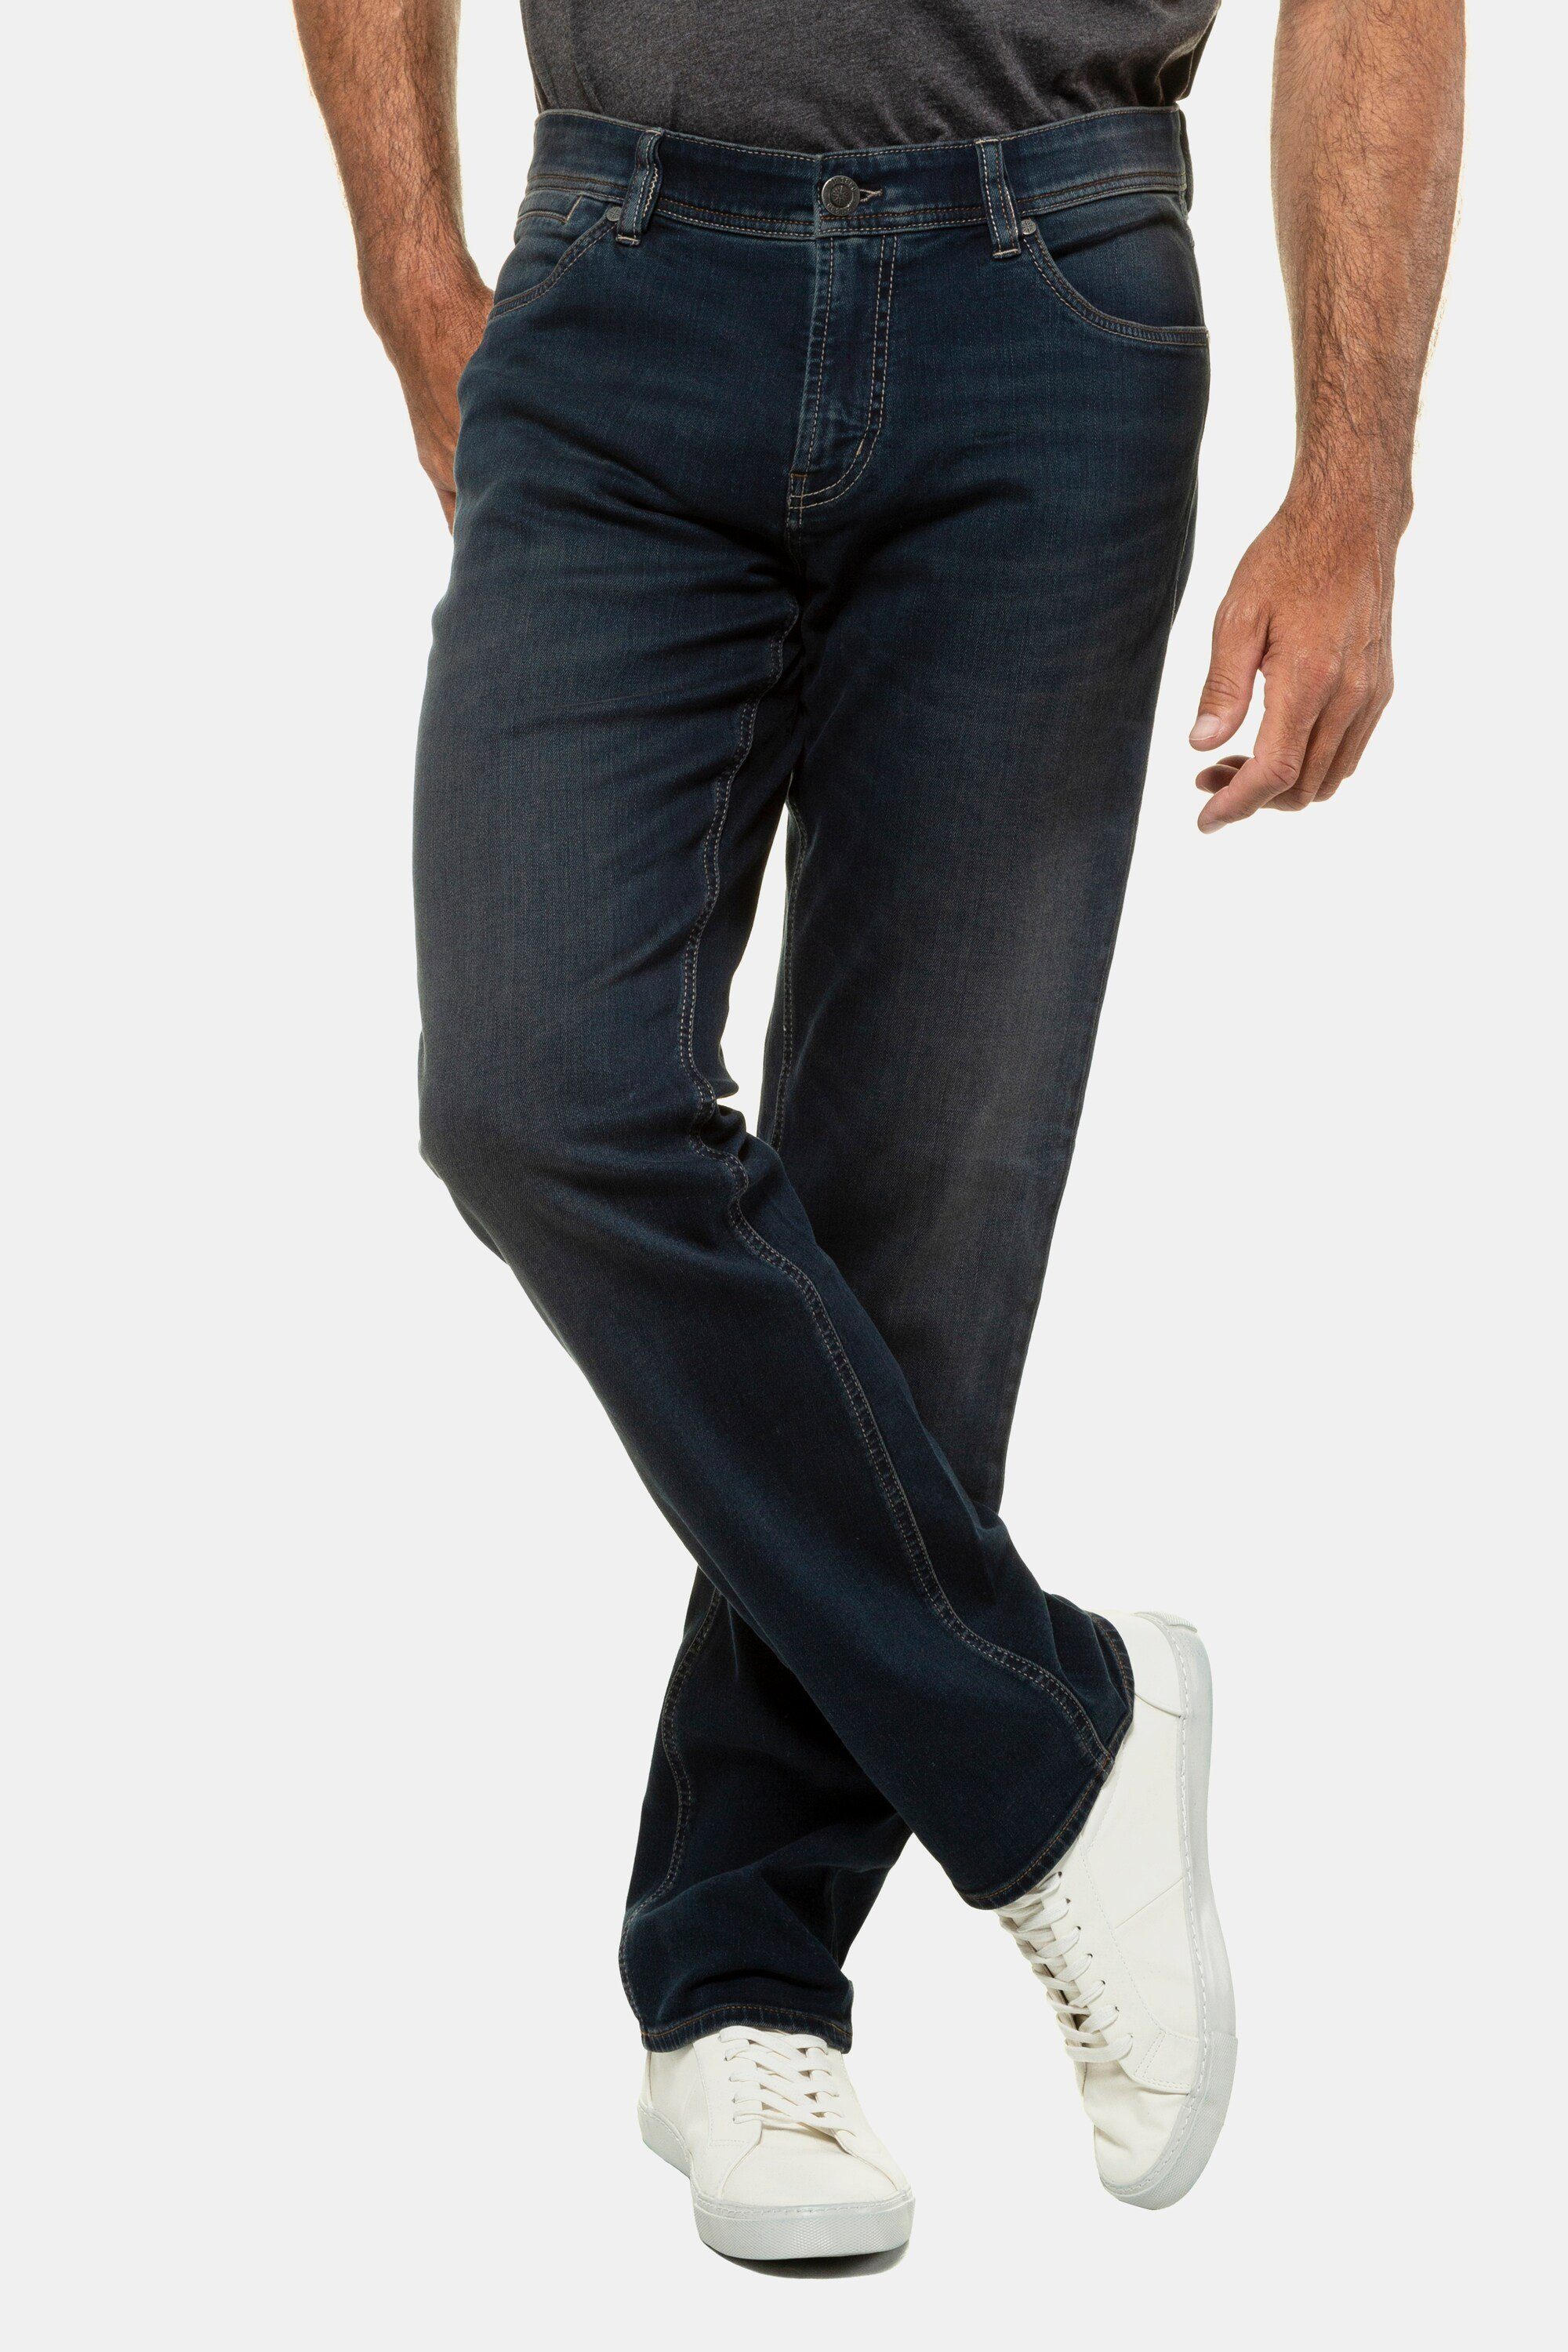 Denim Gr. blue Jeans Cargohose Bauchfit denim bis 70/35 JP1880